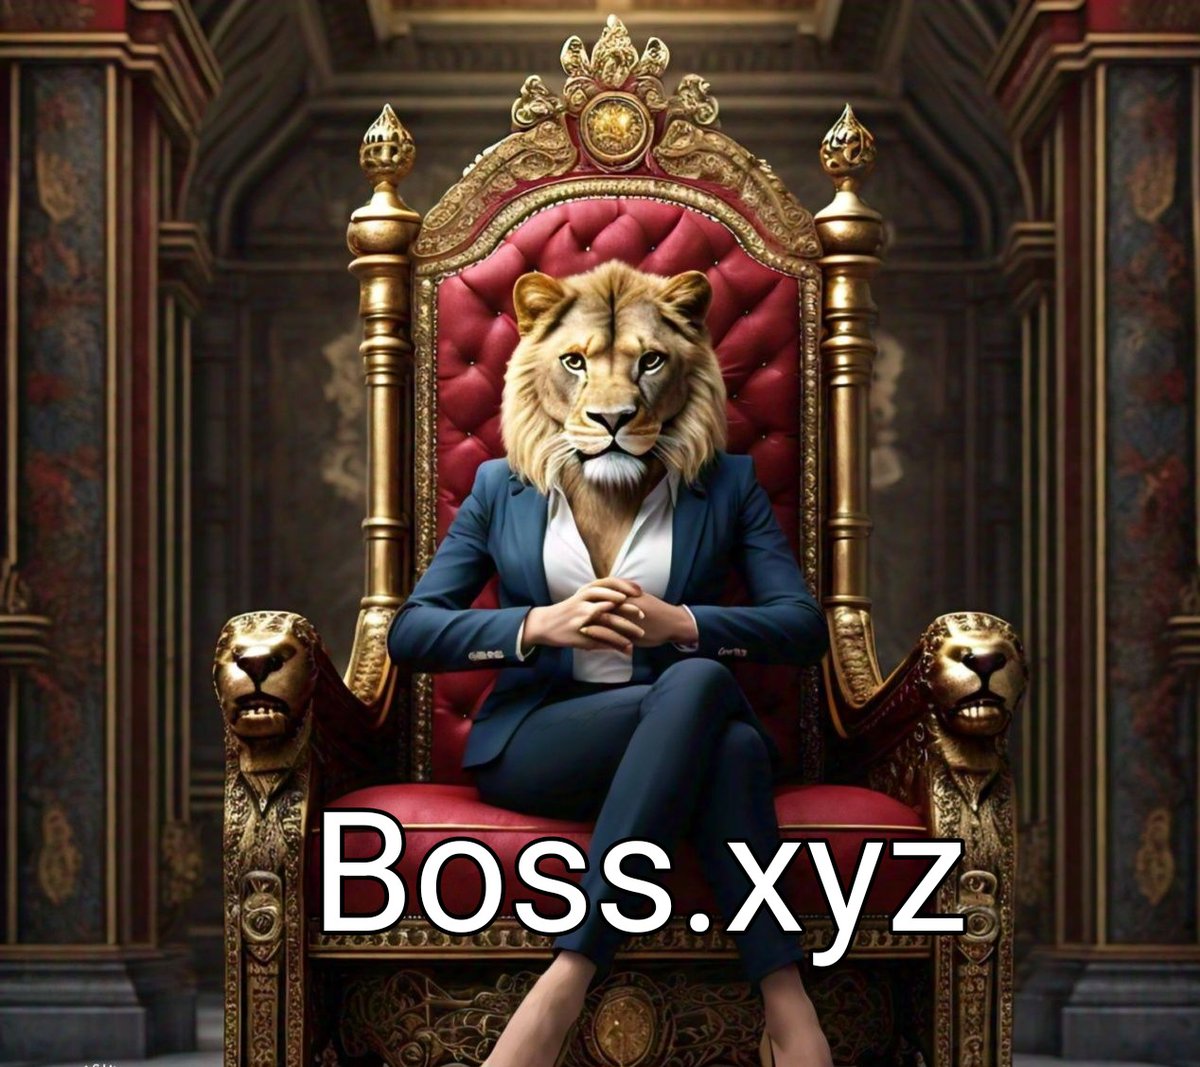 I am my own boss - acquired Boss.xyz 

Now i own lead,sale & boss in xyz.

A great name for NFT, crypto,web3 & blockchain niche etc

#domain #domains #domaining #domainnames #nftart
#Boss #crypto #eth #btc #bitcoin #Ethereum #business #domainsforsale #bossxyz #xyz